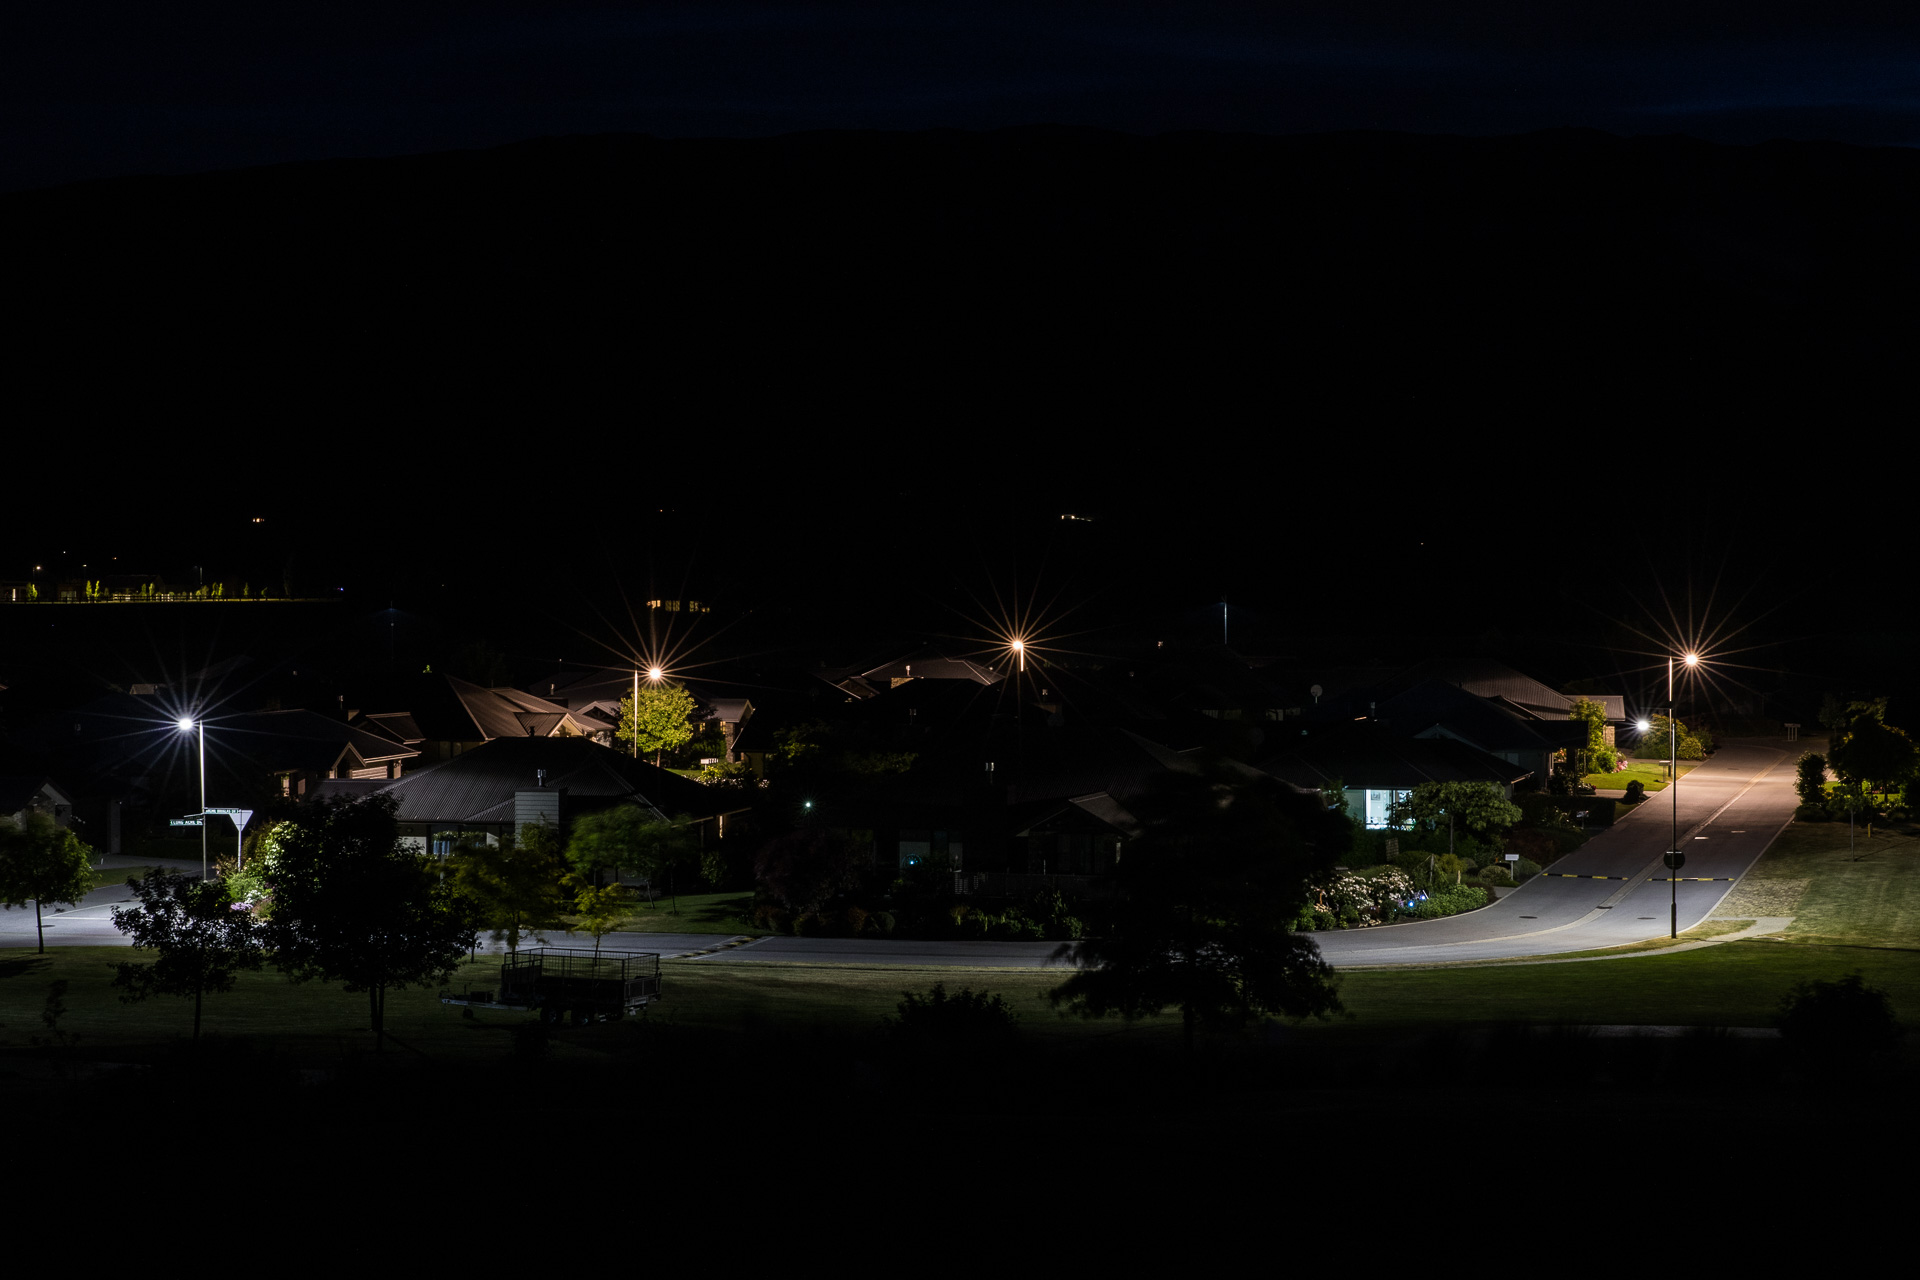 Aspiring Retirement village street at night, illuminated by ibex lighting